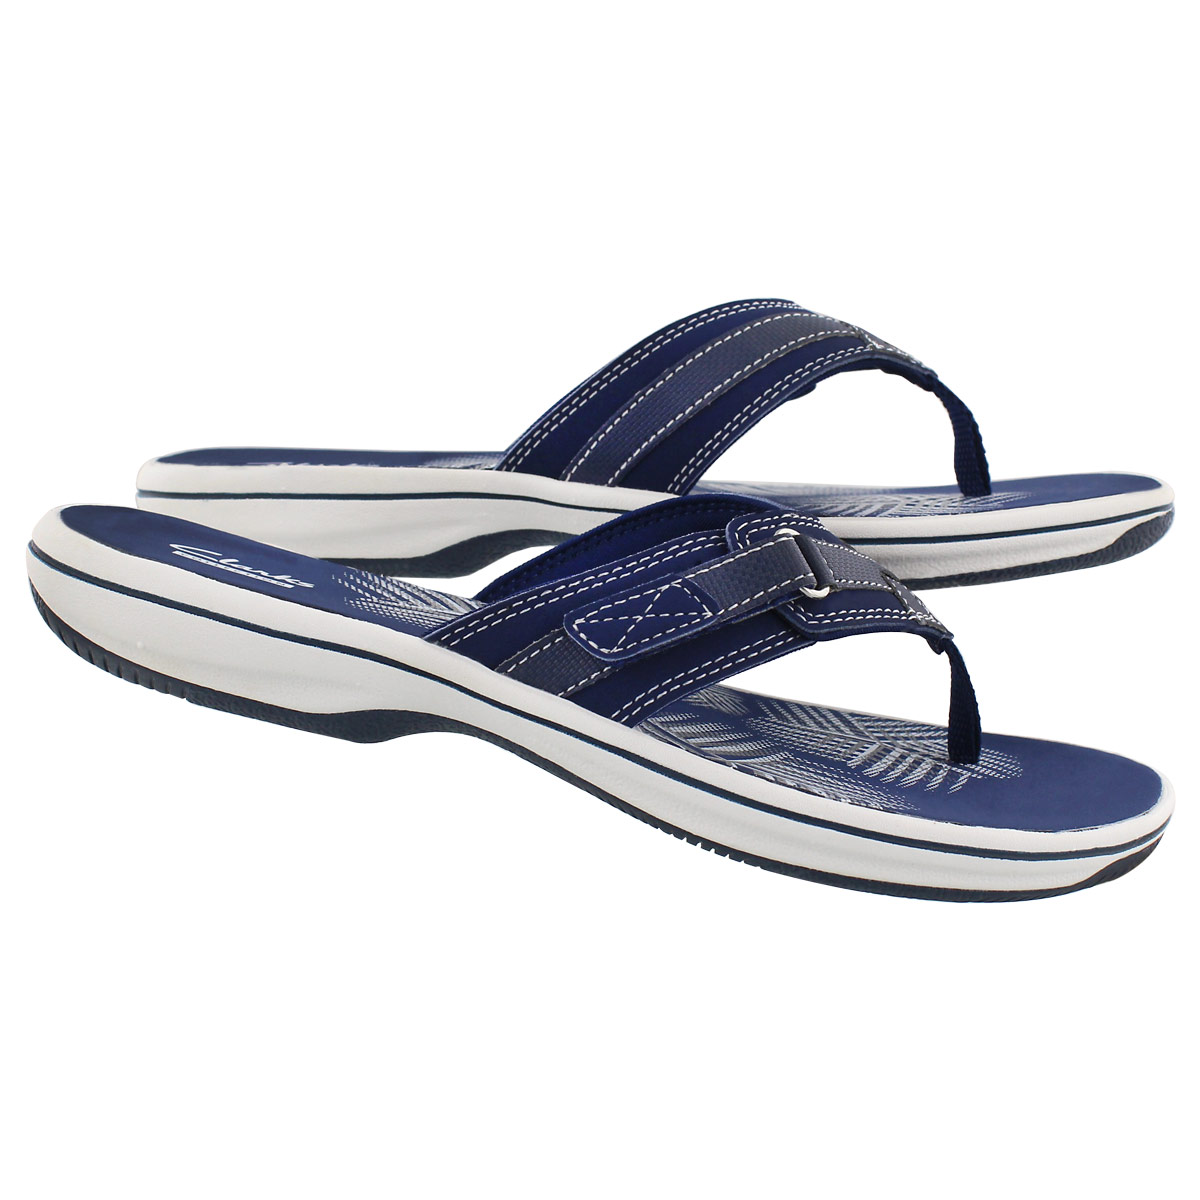 Clarks Women's Breeze Sea Thong Sandal | eBay